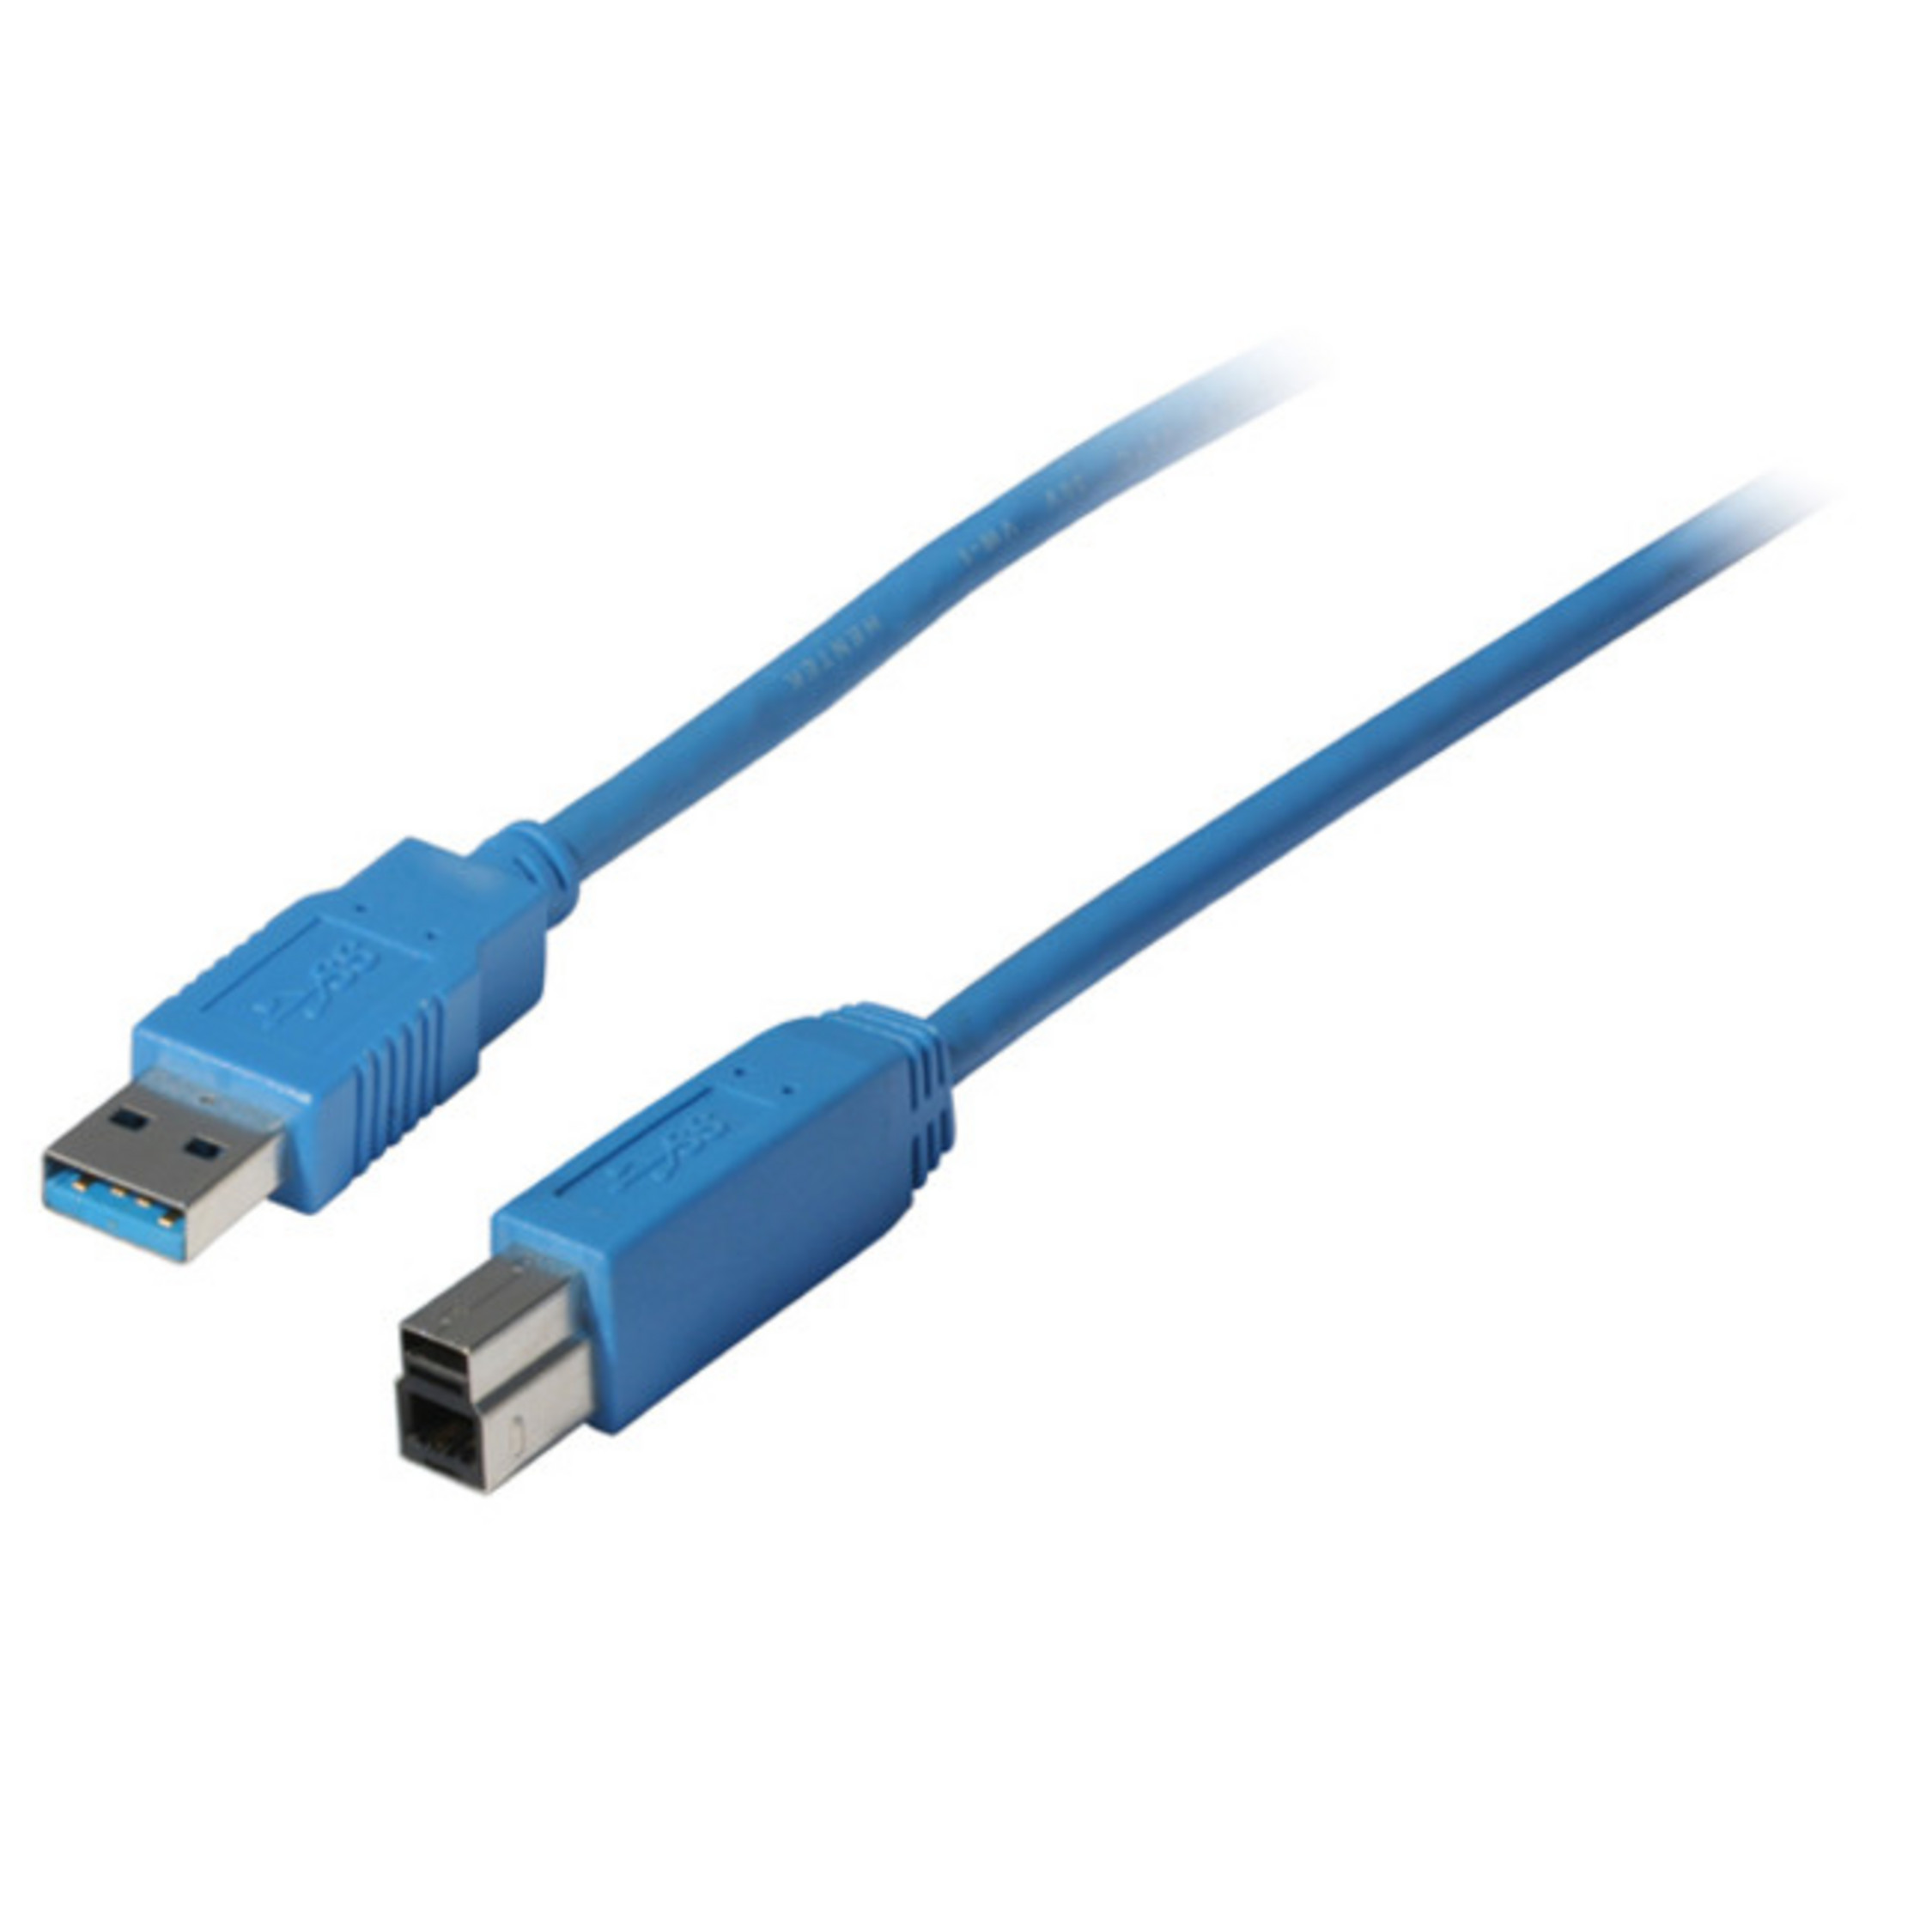 S/CONN MAXIMUM CONNECTIVITY USB USB Stecker Kabel A Stecker B blau Kabel 5m USB 3.0 